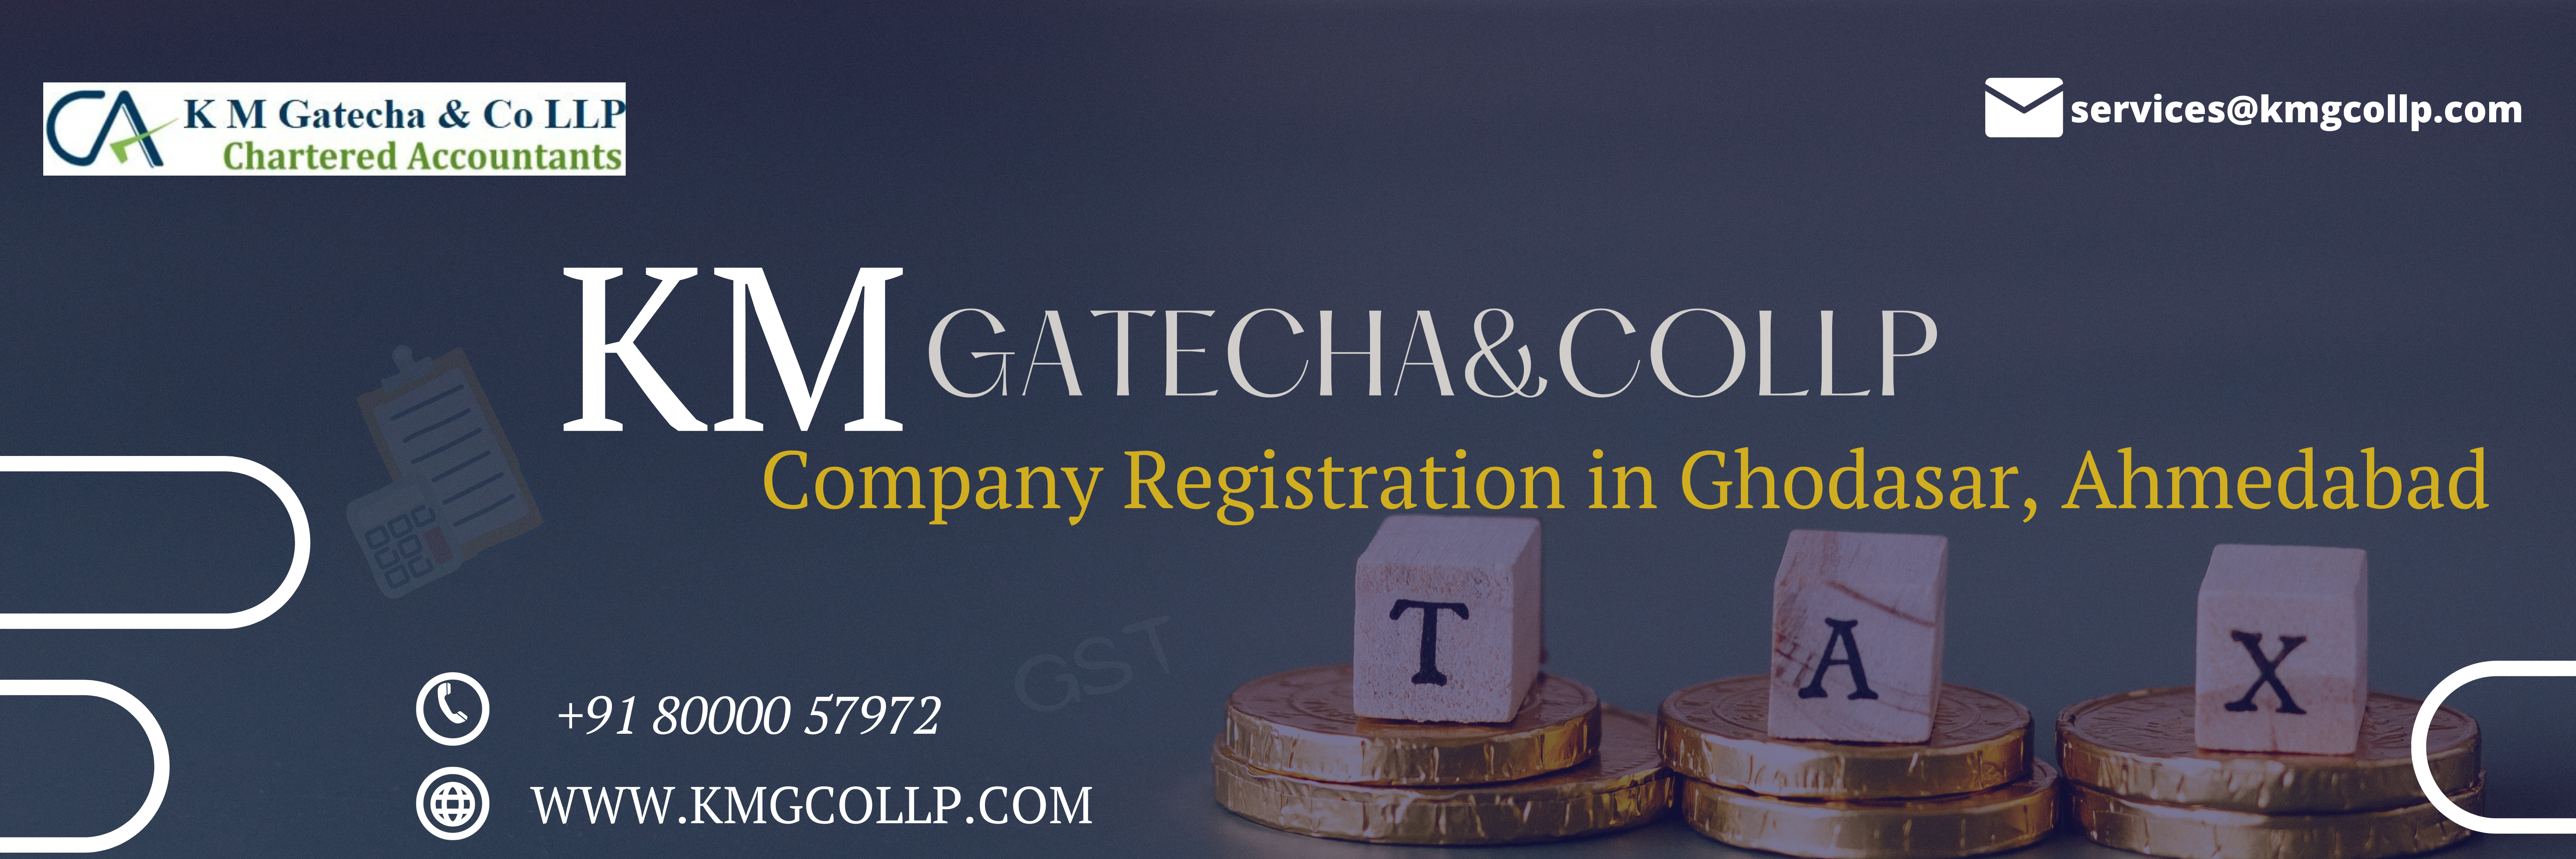 Company Registration in Ghodasar